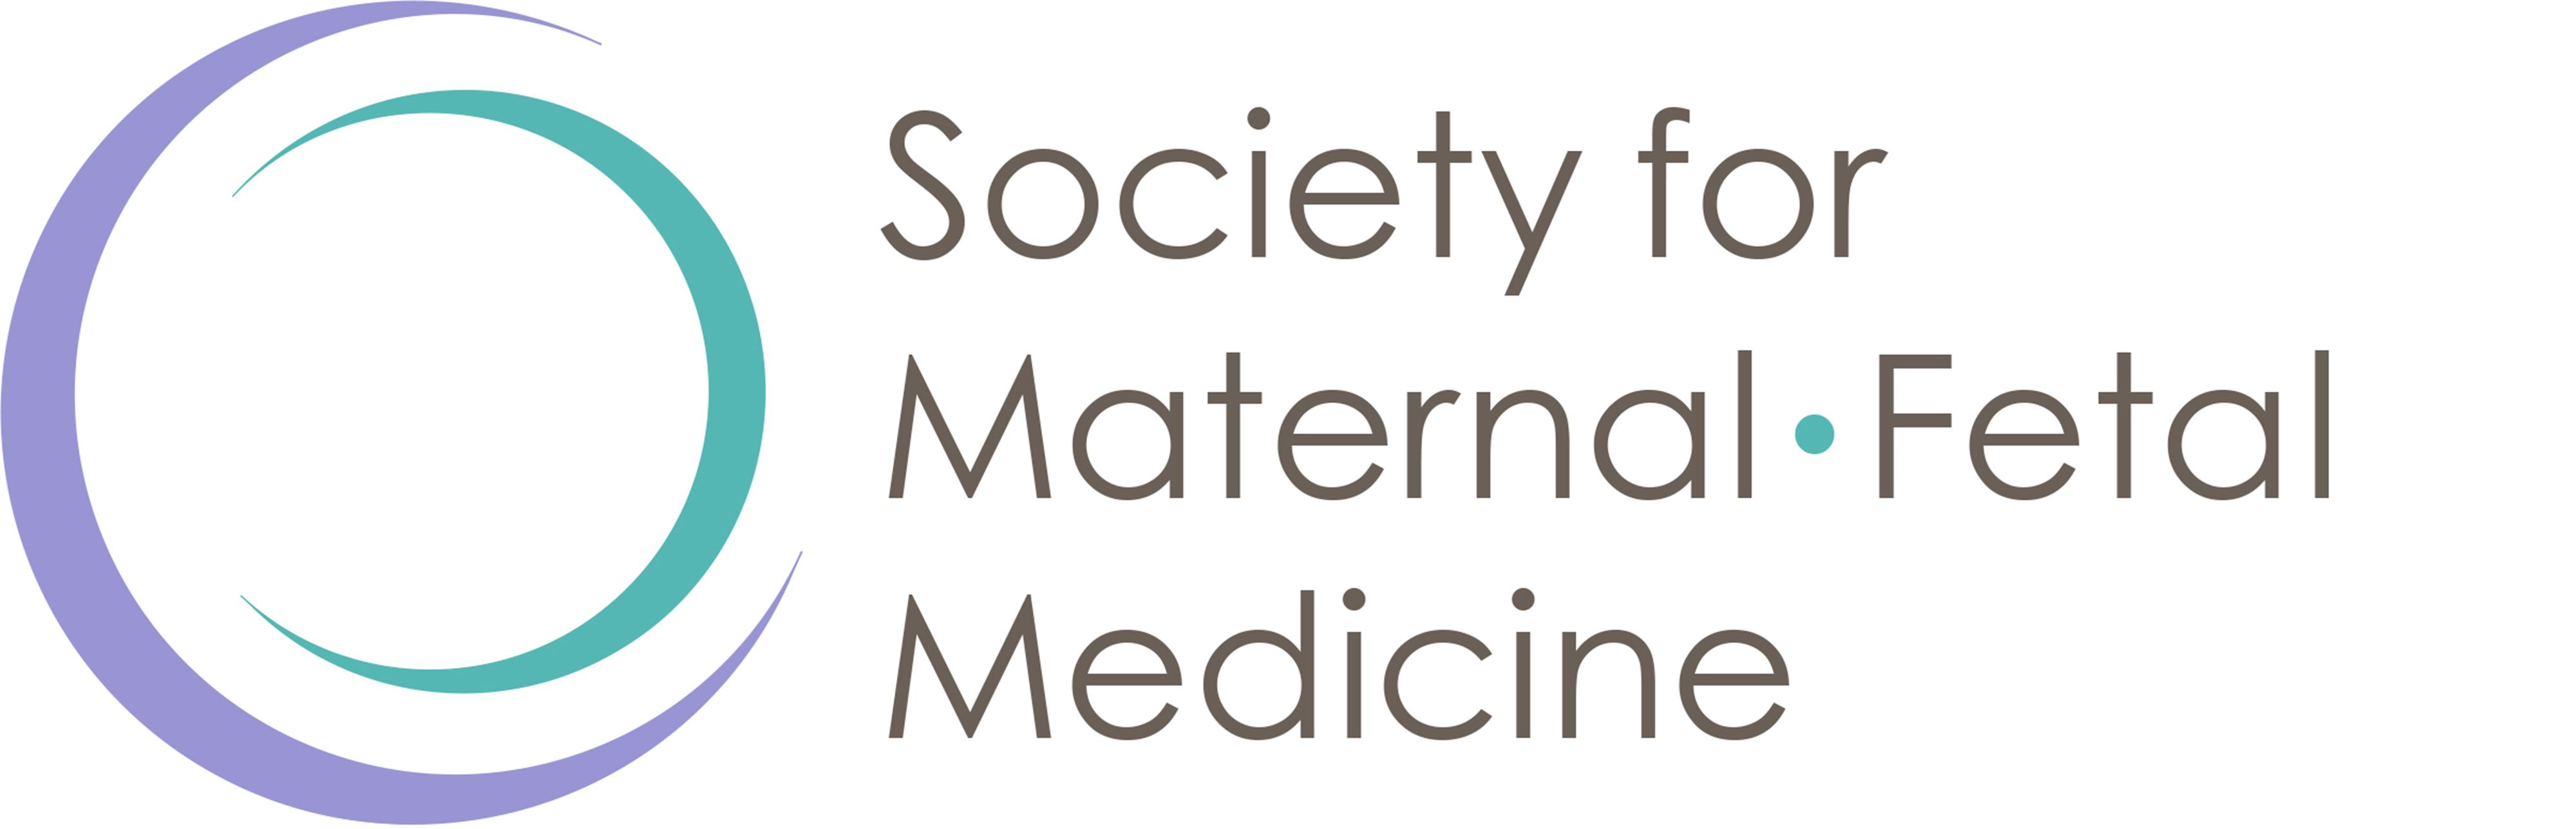 The Society for Maternal-Fetal Medicine logo